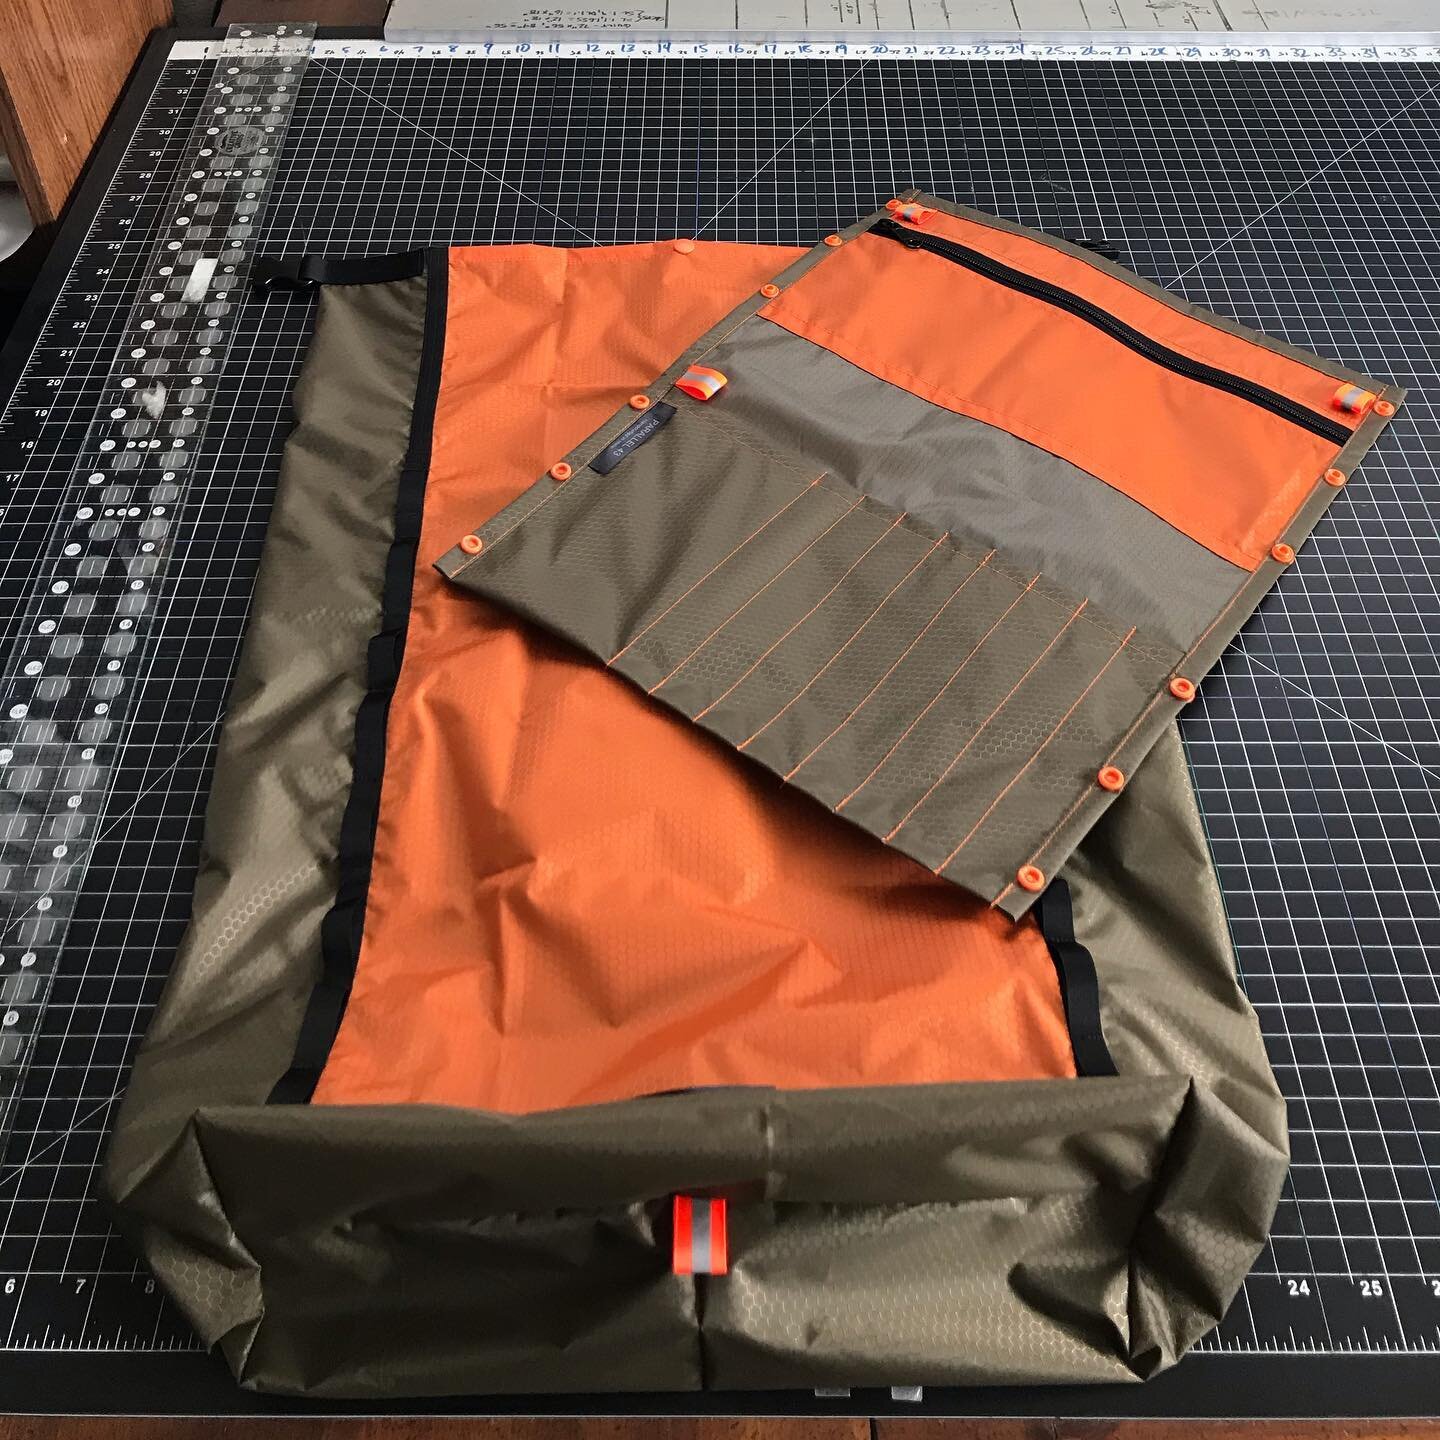 Matching Dirtbag and Shelter Bag for an Idaho customer. I&rsquo;m really liking the Dark Olive and Burnt Orange together. 

#idaho #idahome #backpacking #backpackinggear #camping #hammockcamping #handcrafted #handcraftedinidaho #customgear #coldbeer 